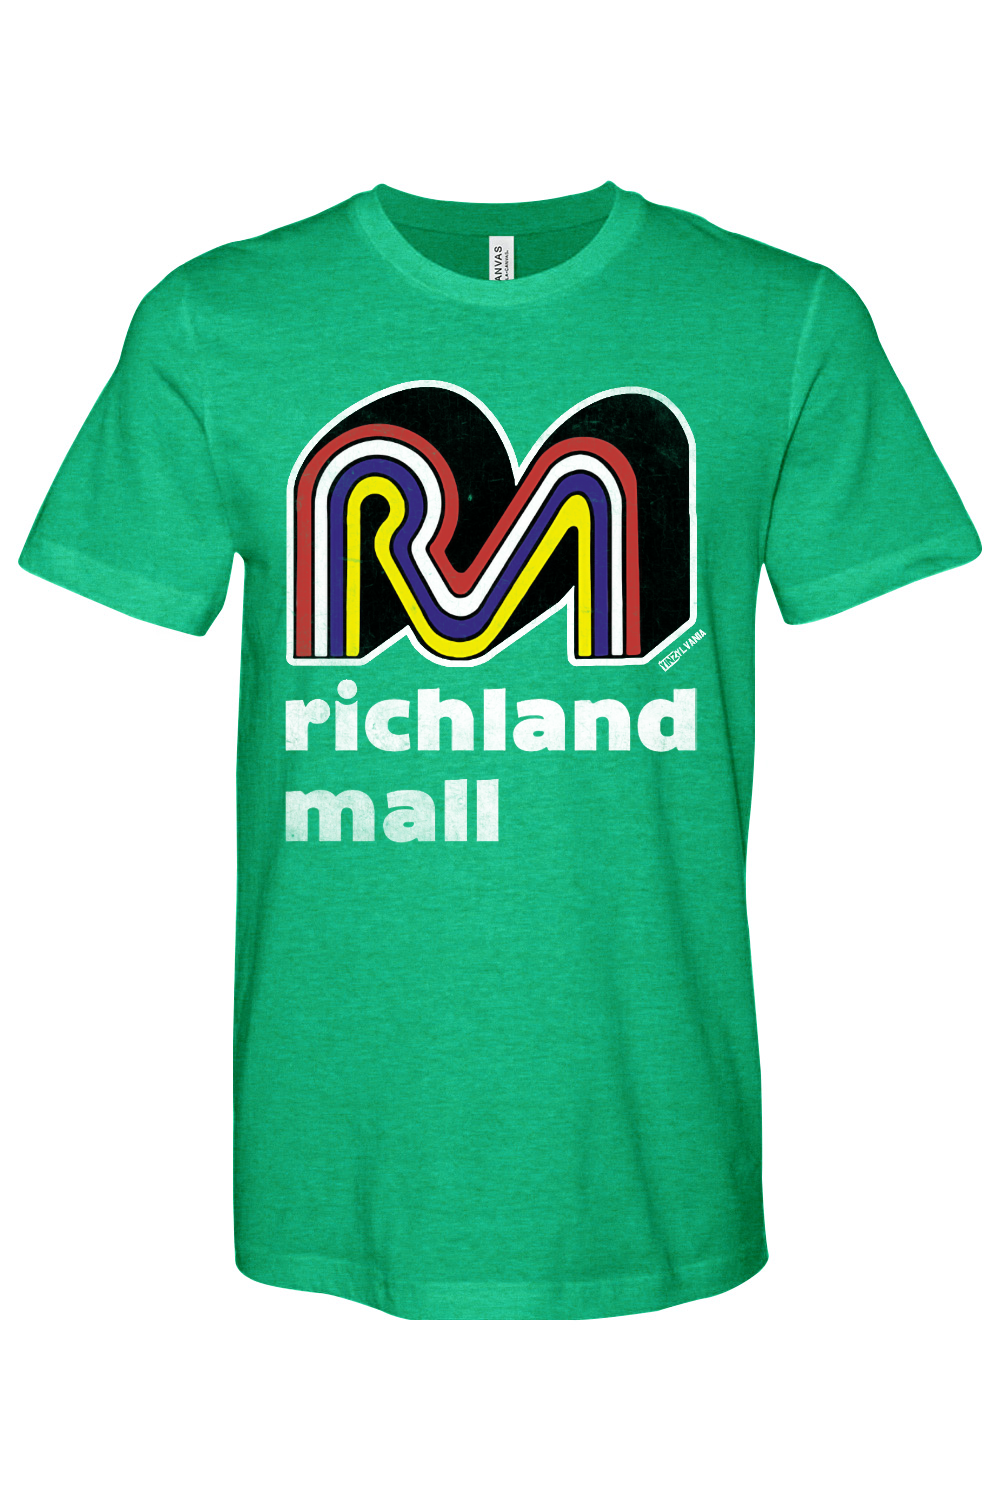 Richland Mall - Bella + Canvas Heathered Jersey Tee - Yinzylvania